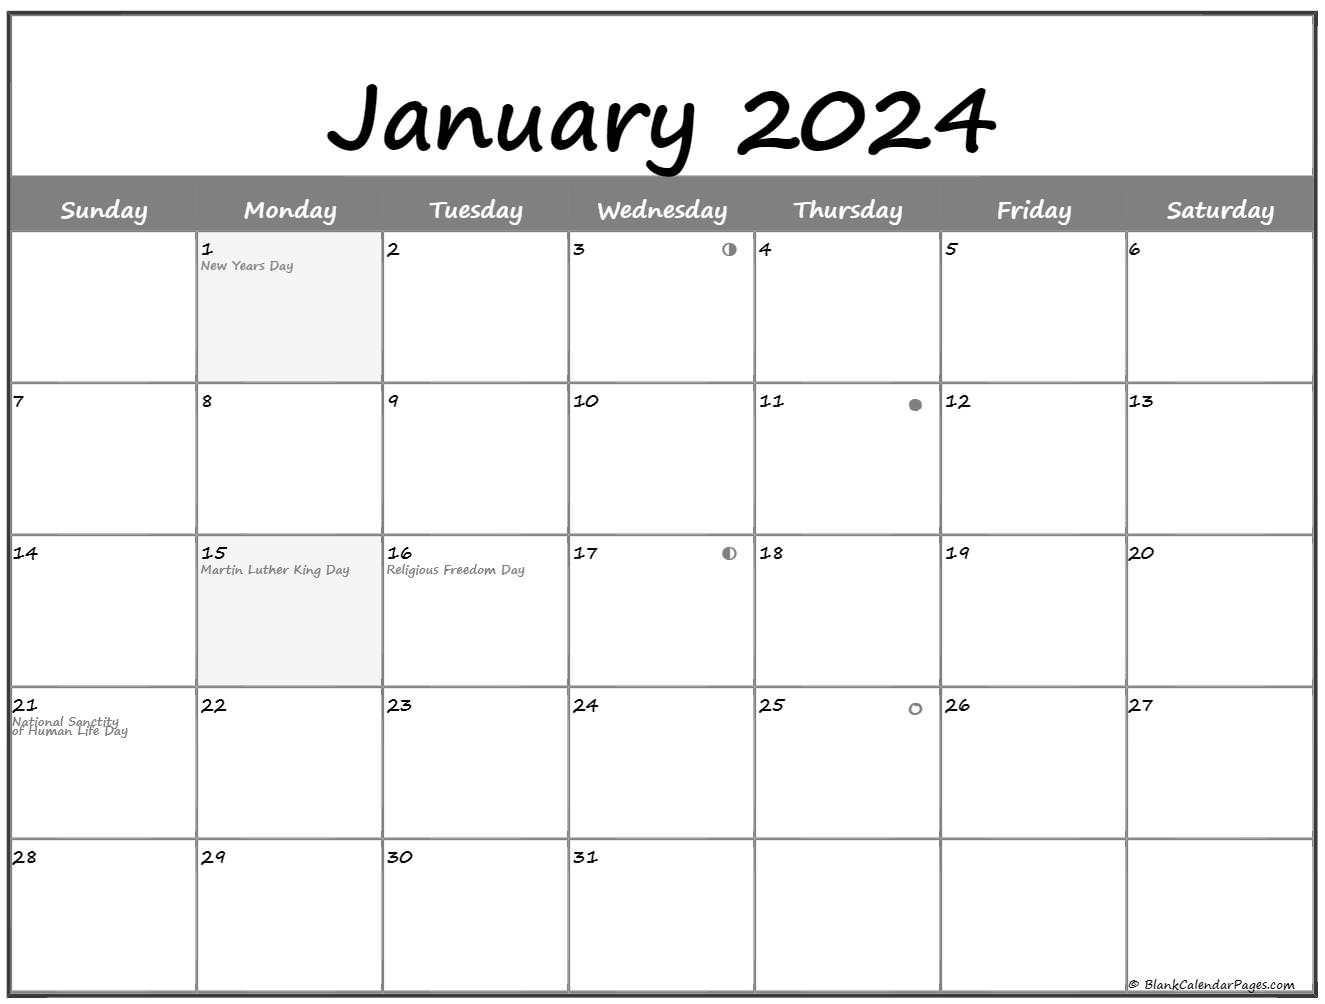 October 2022 Moon Calendar January 2022 Lunar Calendar | Moon Phase Calendar